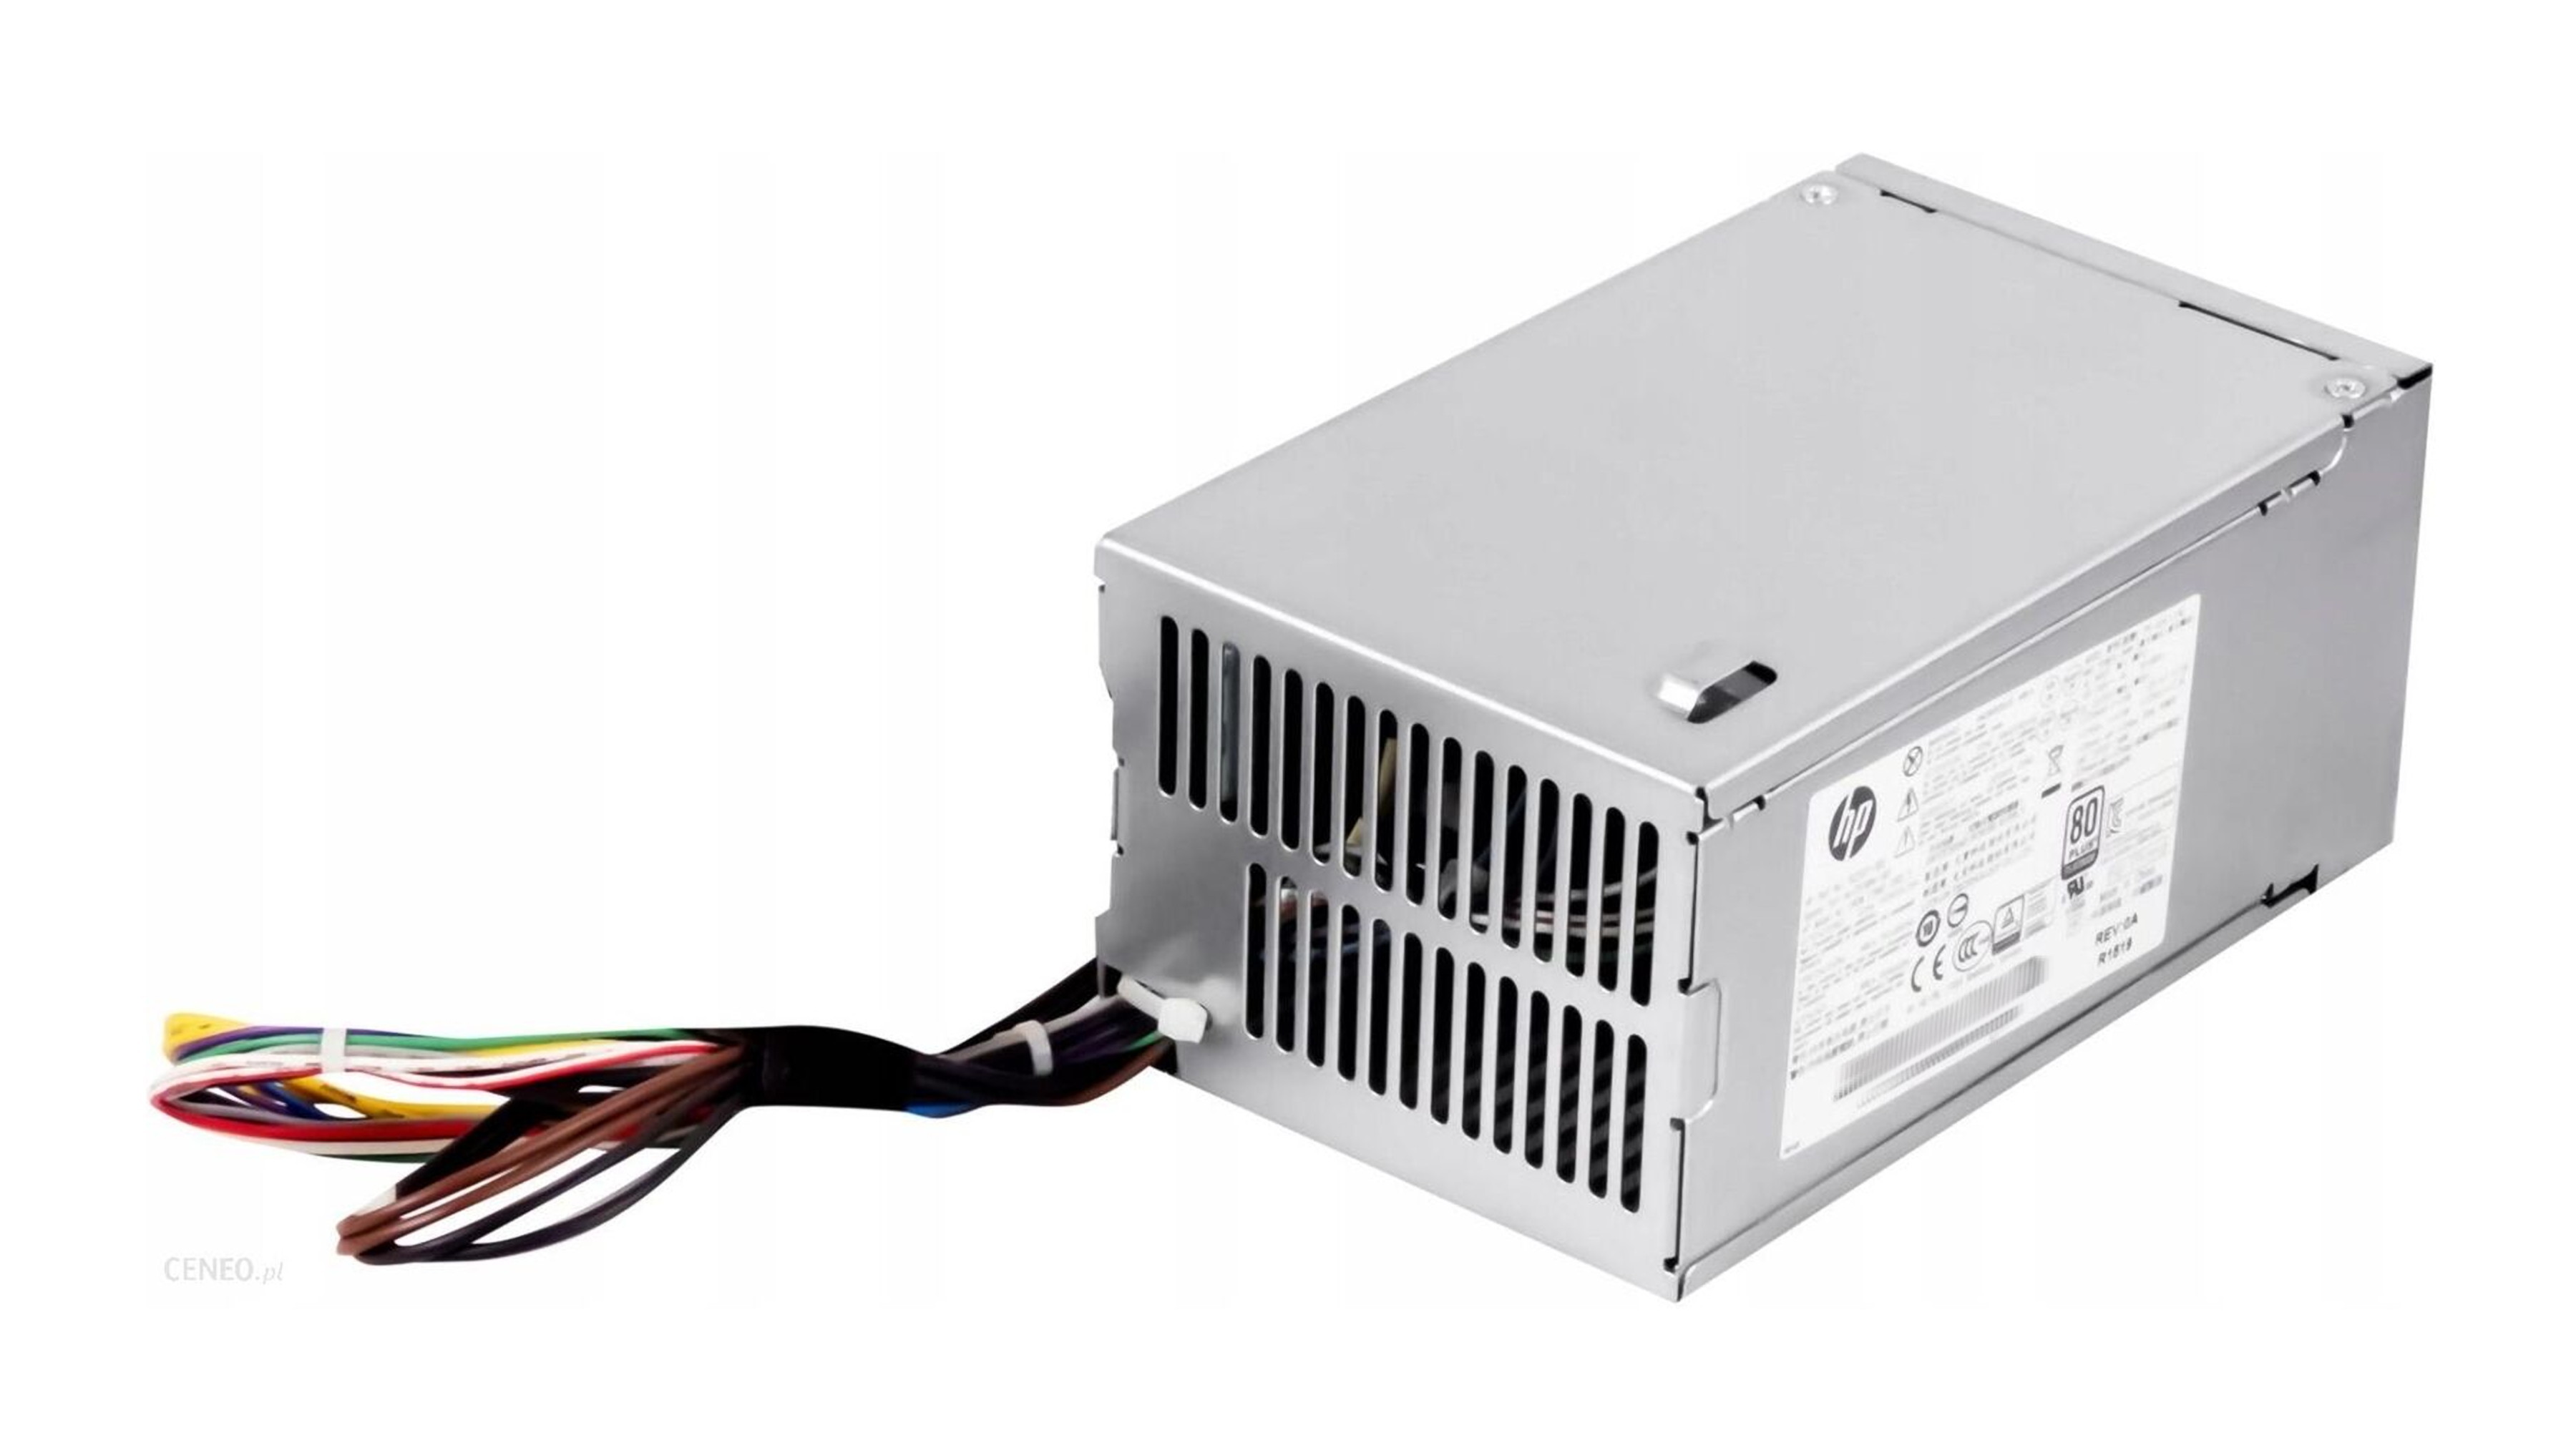 HP Power Supply PS-4241-1 HC 751884-001 702307-002 240W ProDesk 800 z230 z240